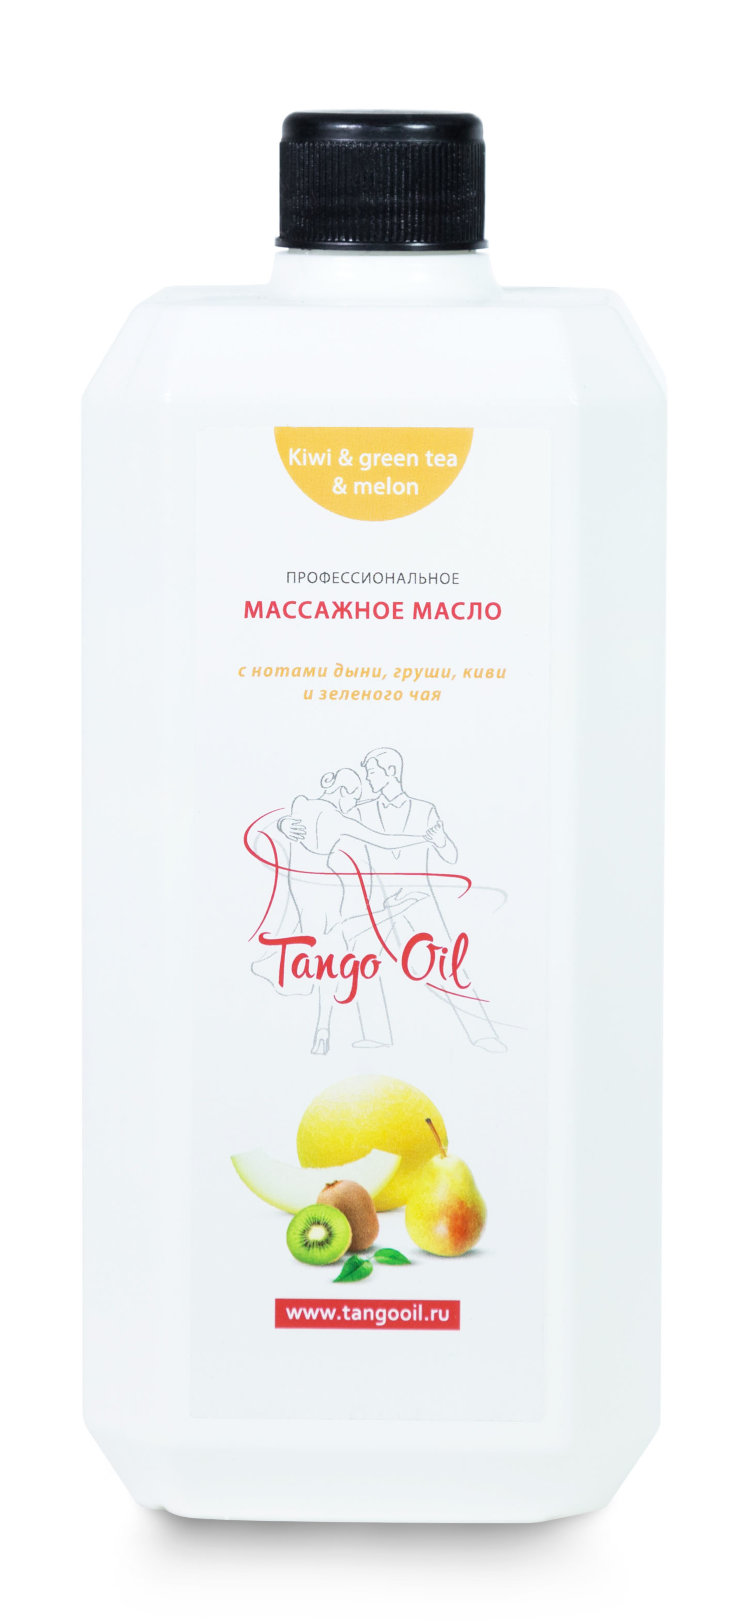 Tango Oil массажное масло Киви, зелёный чай, дыня, 1000 мл